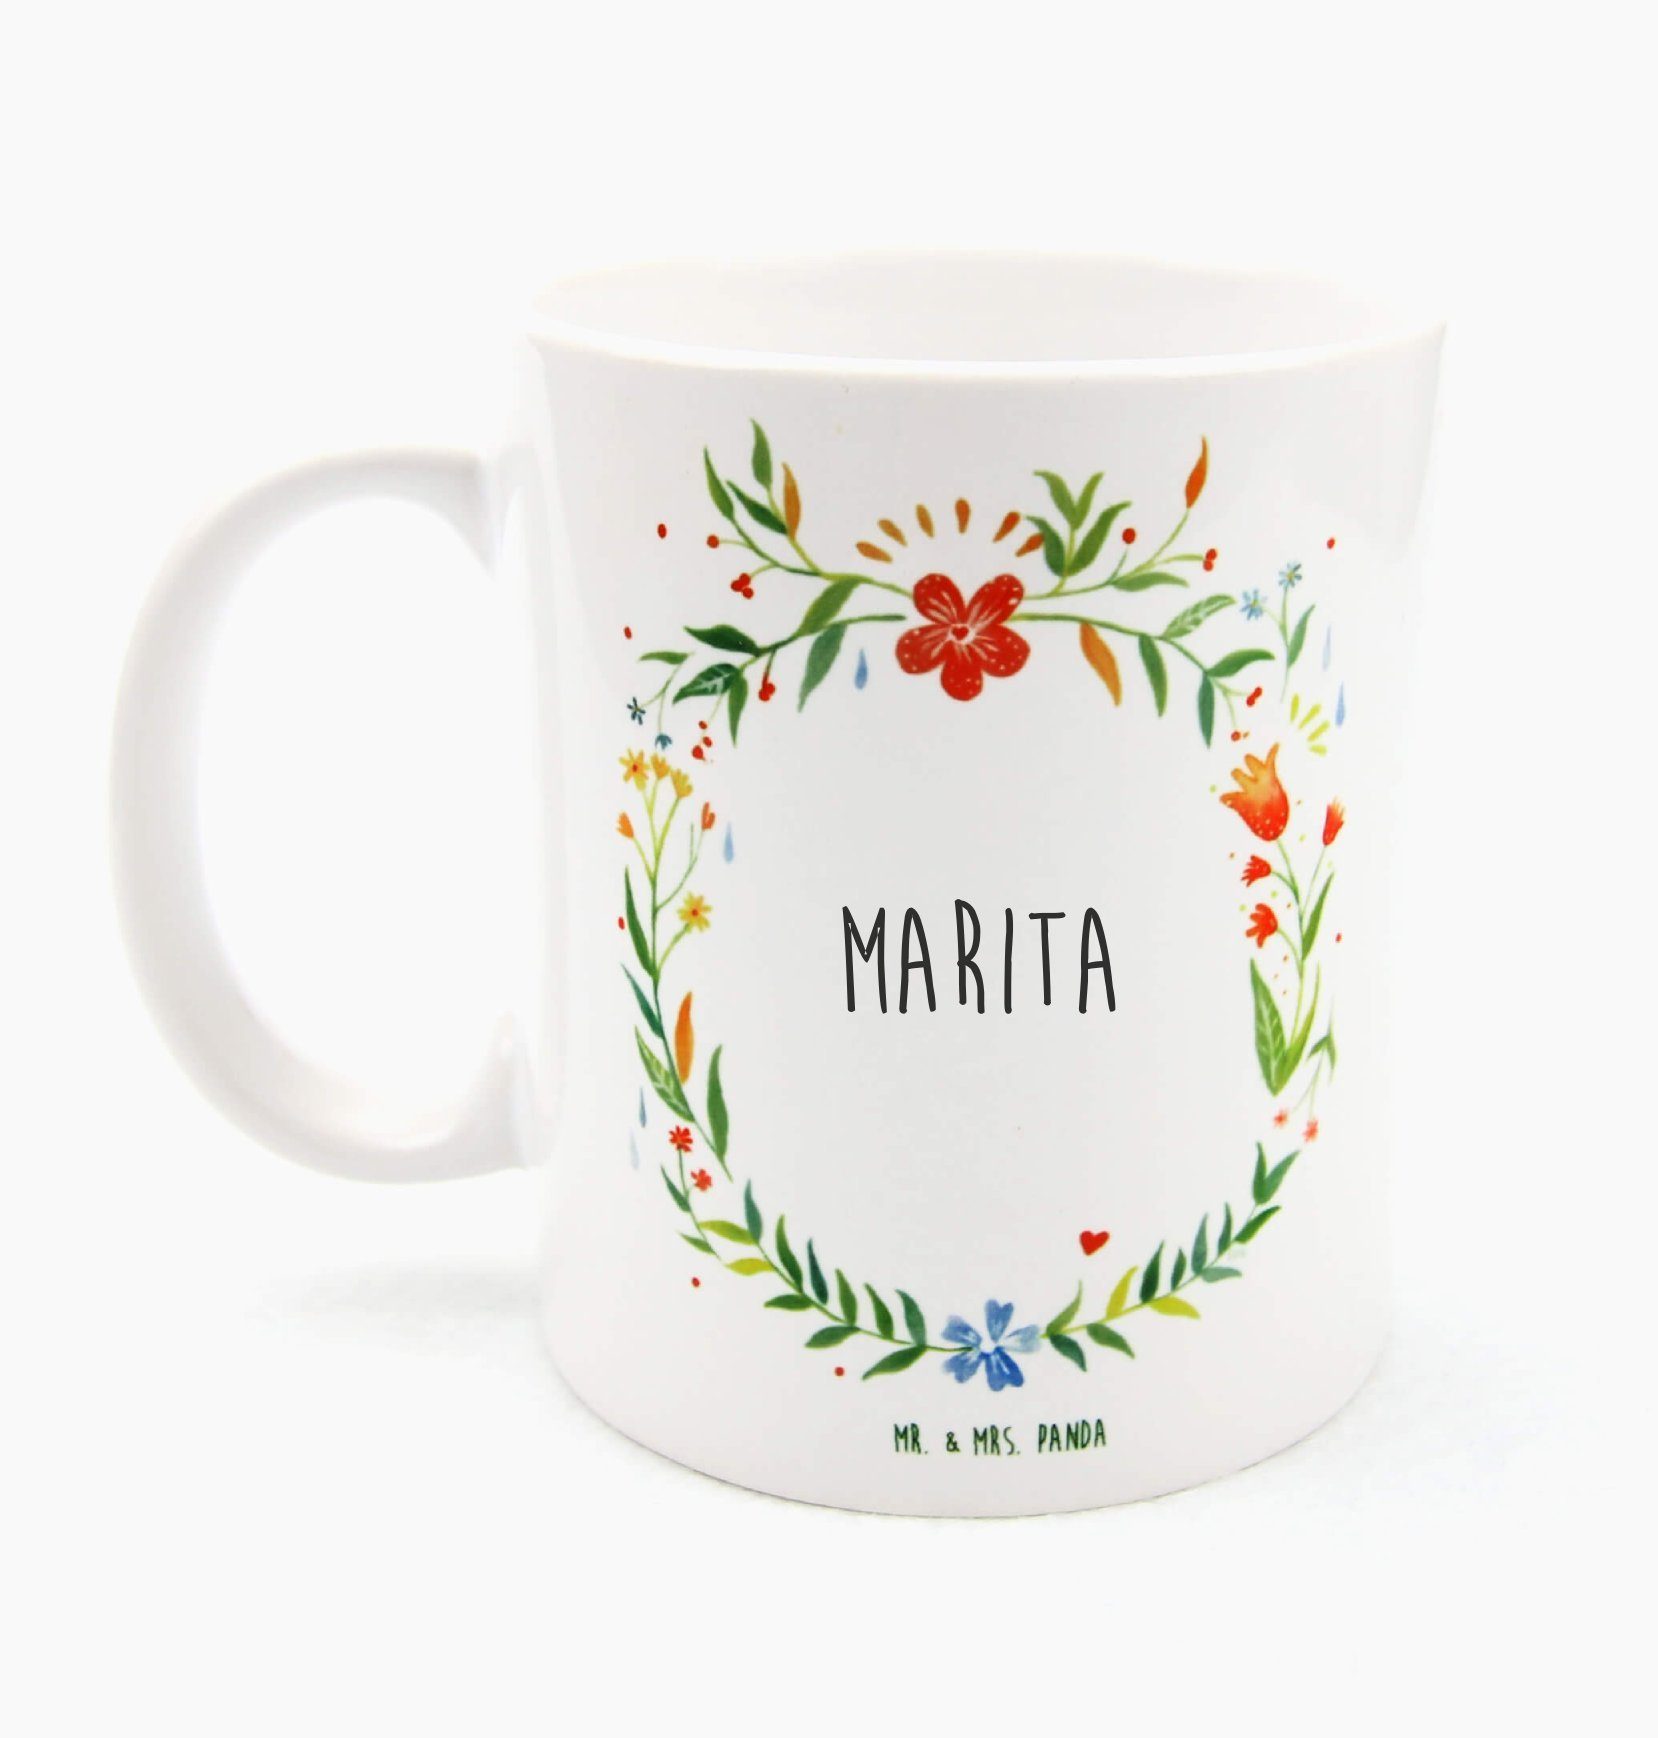 Mr. & Mrs. Panda Tasse Marita - Geschenk, Kaffeetasse, Tasse Sprüche, Teebecher, Tasse, Büro, Keramik